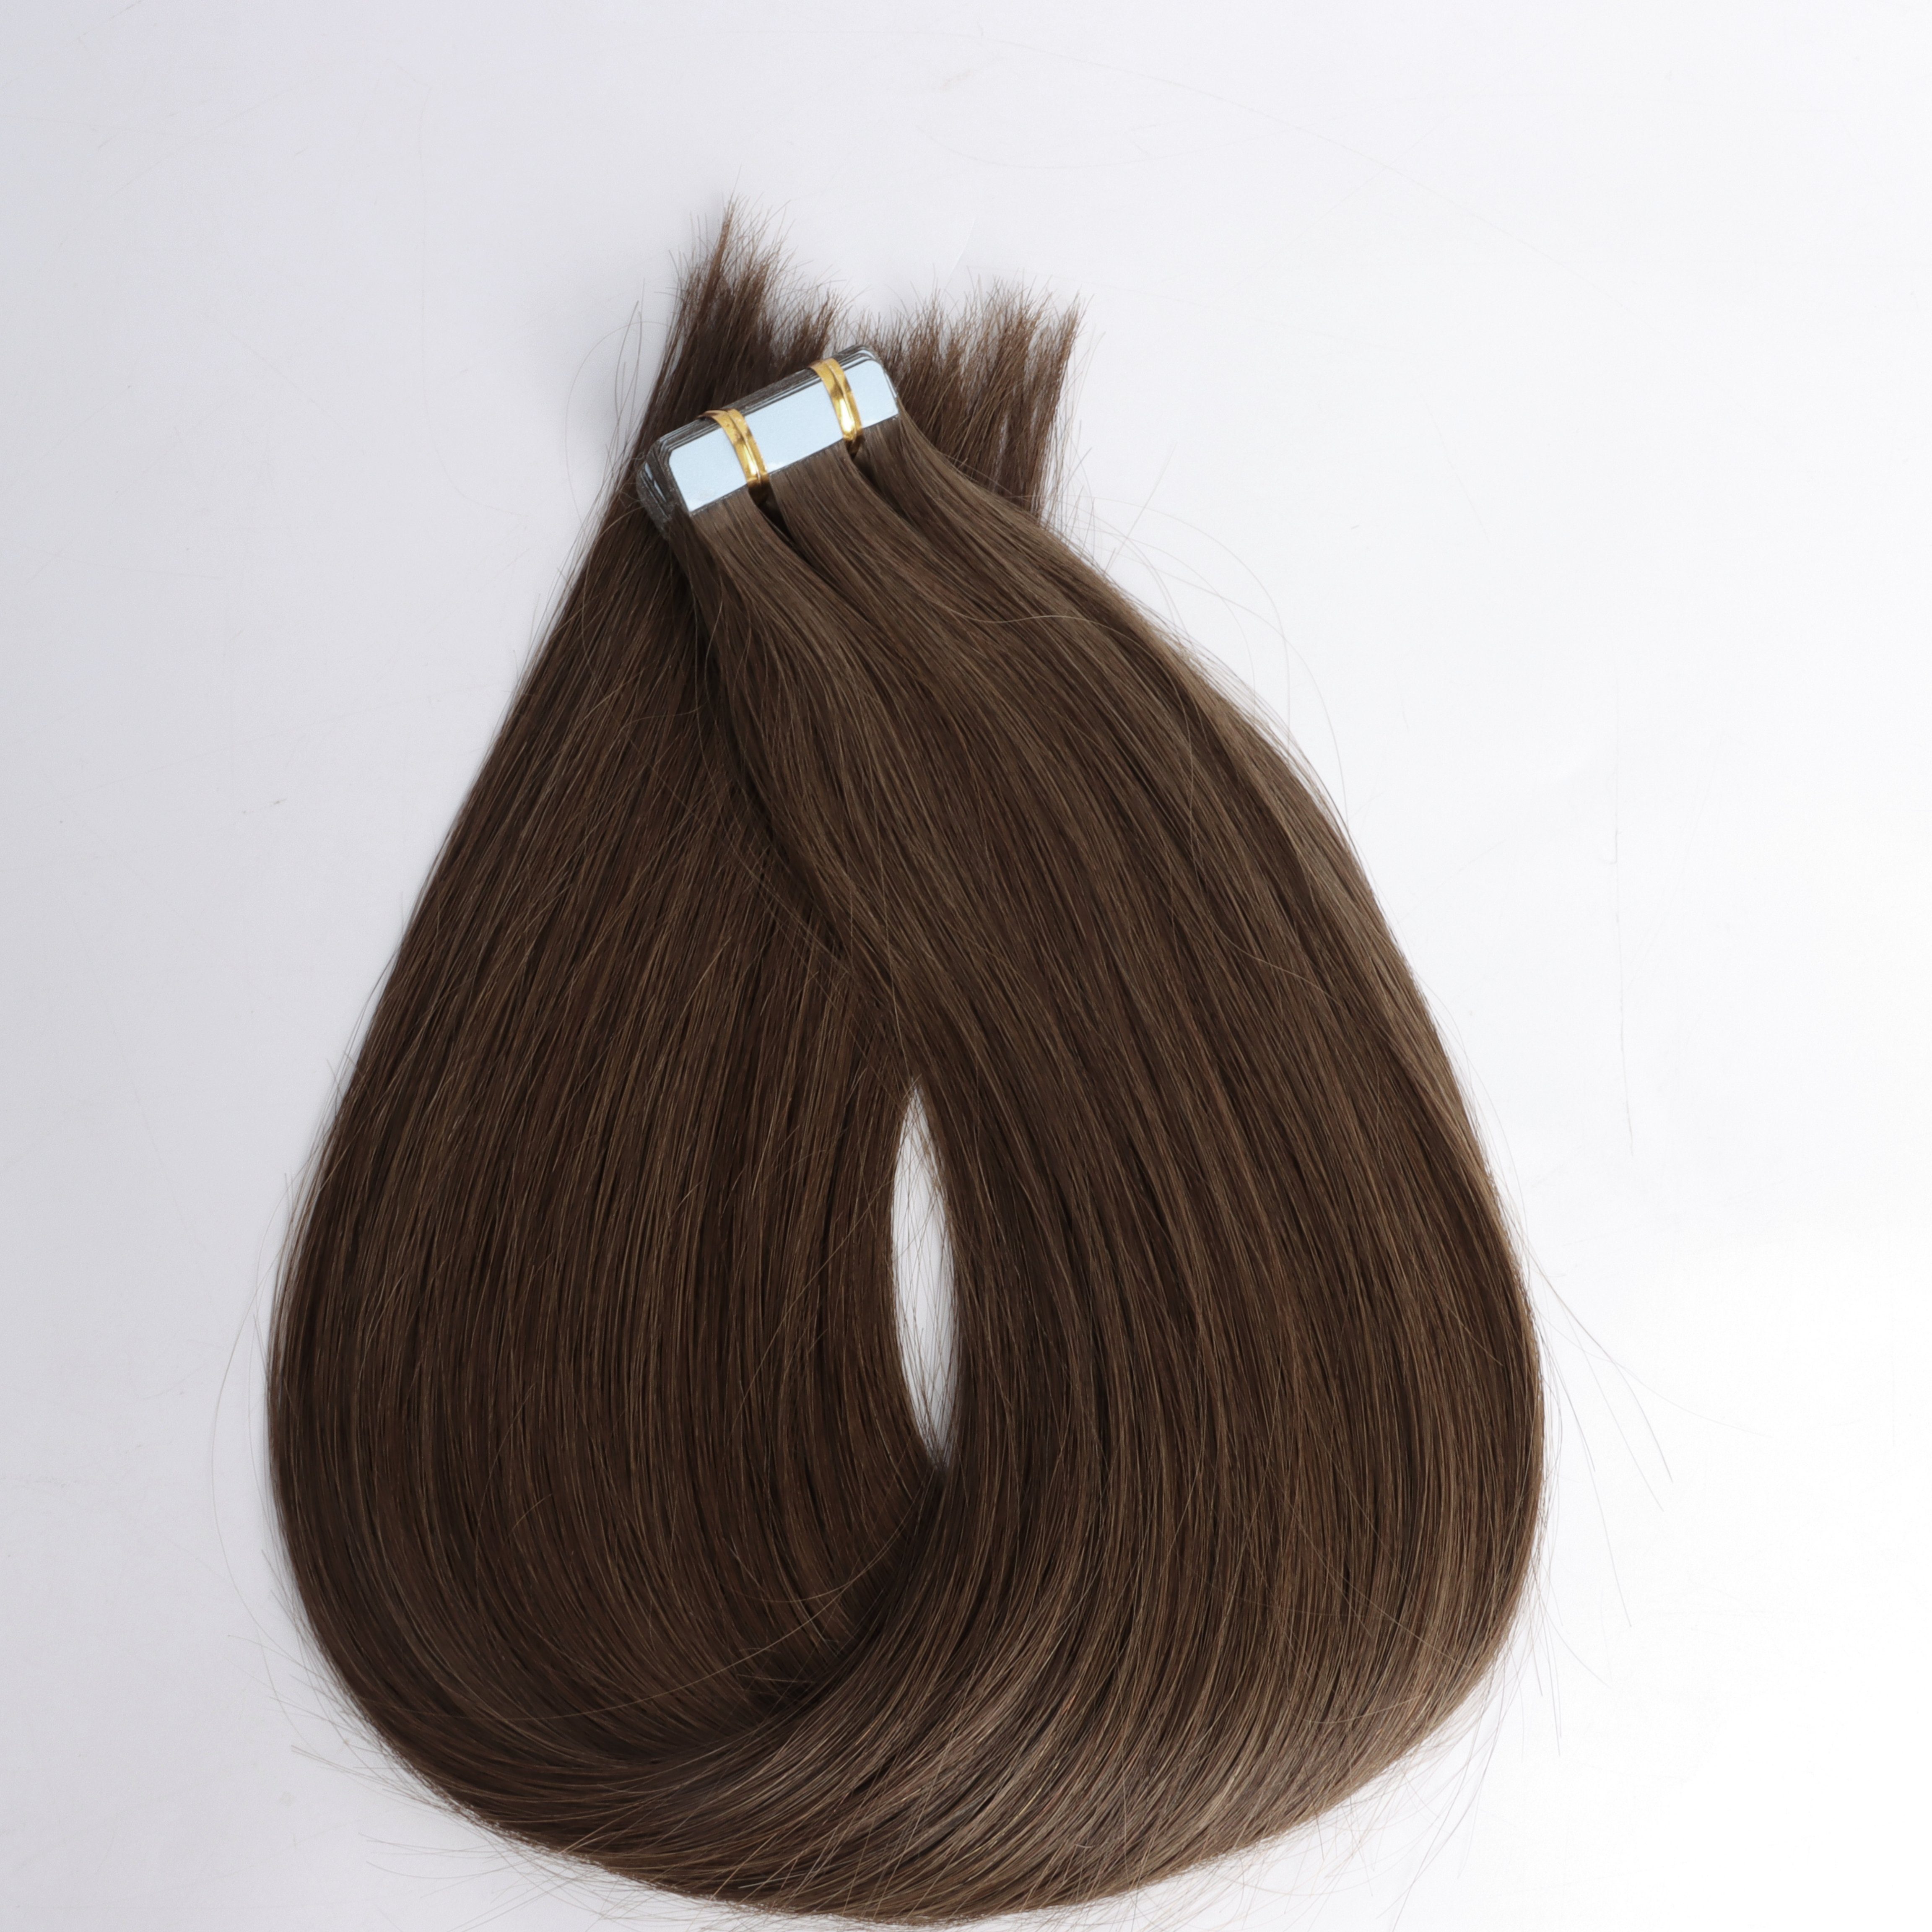 Double YC Remy Menschenhaar #4 Drawn & Style Hair 100 cm On-Extension Tape Echthaar chestnut-brown-50 Skin-Wefts Echthaar-Extension gr, Fashion % 25